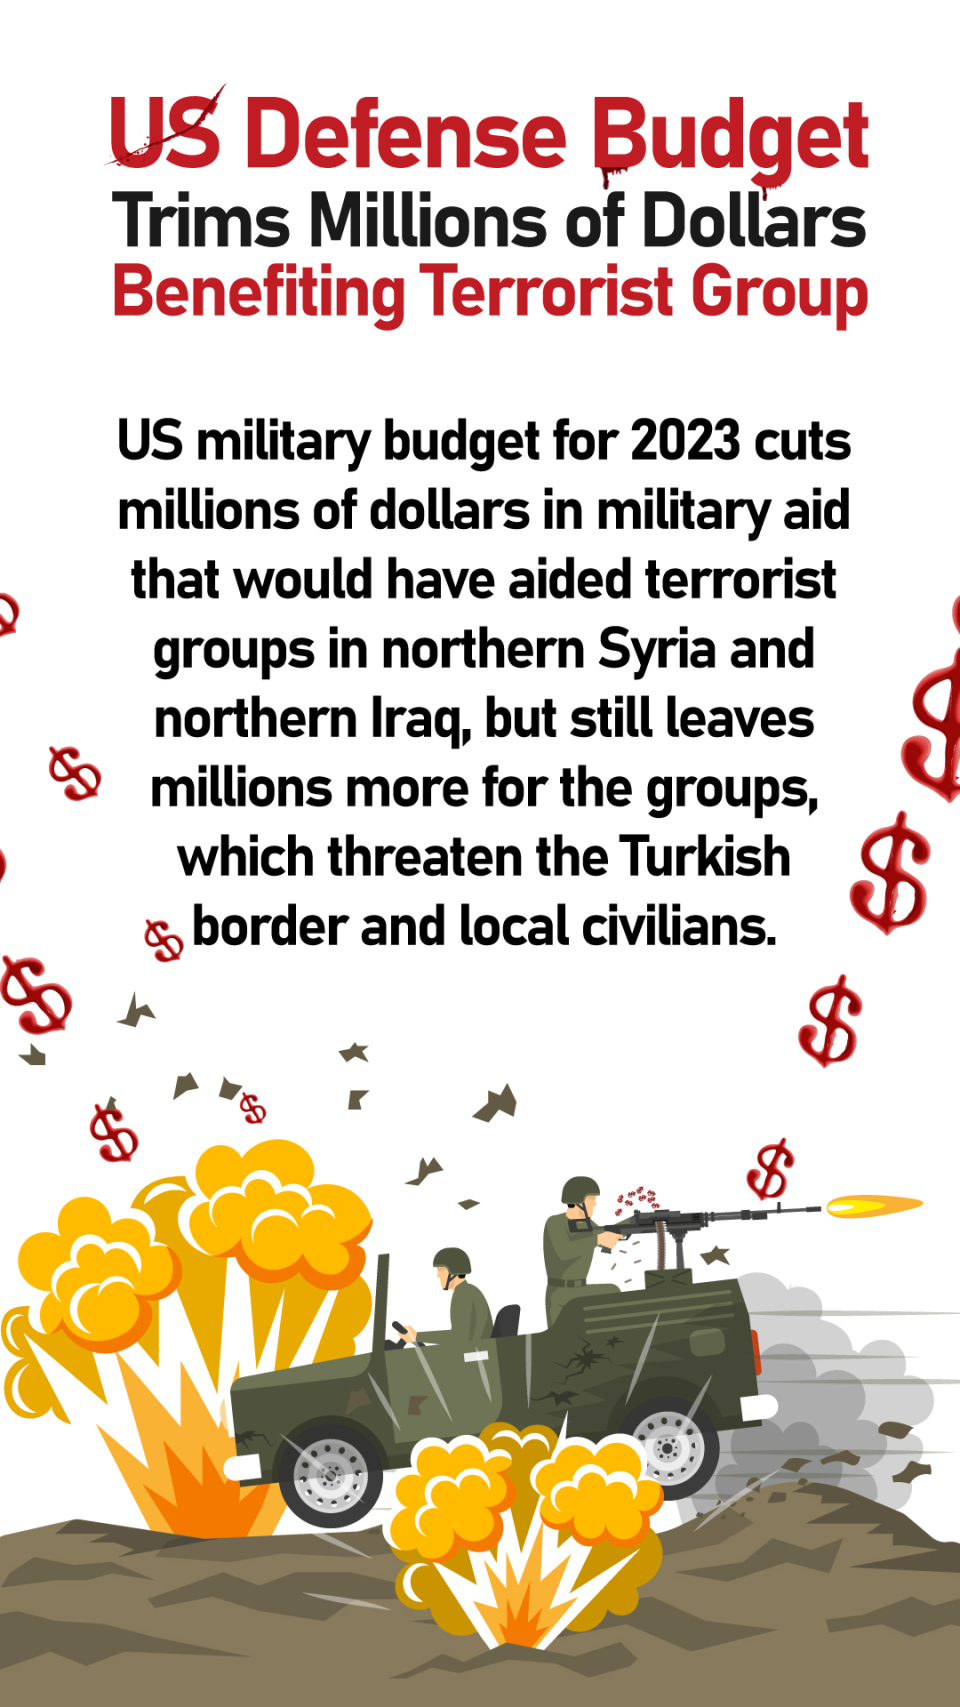 US Defense Budget Trims Millions of Dollars Benefiting Terrorist Group